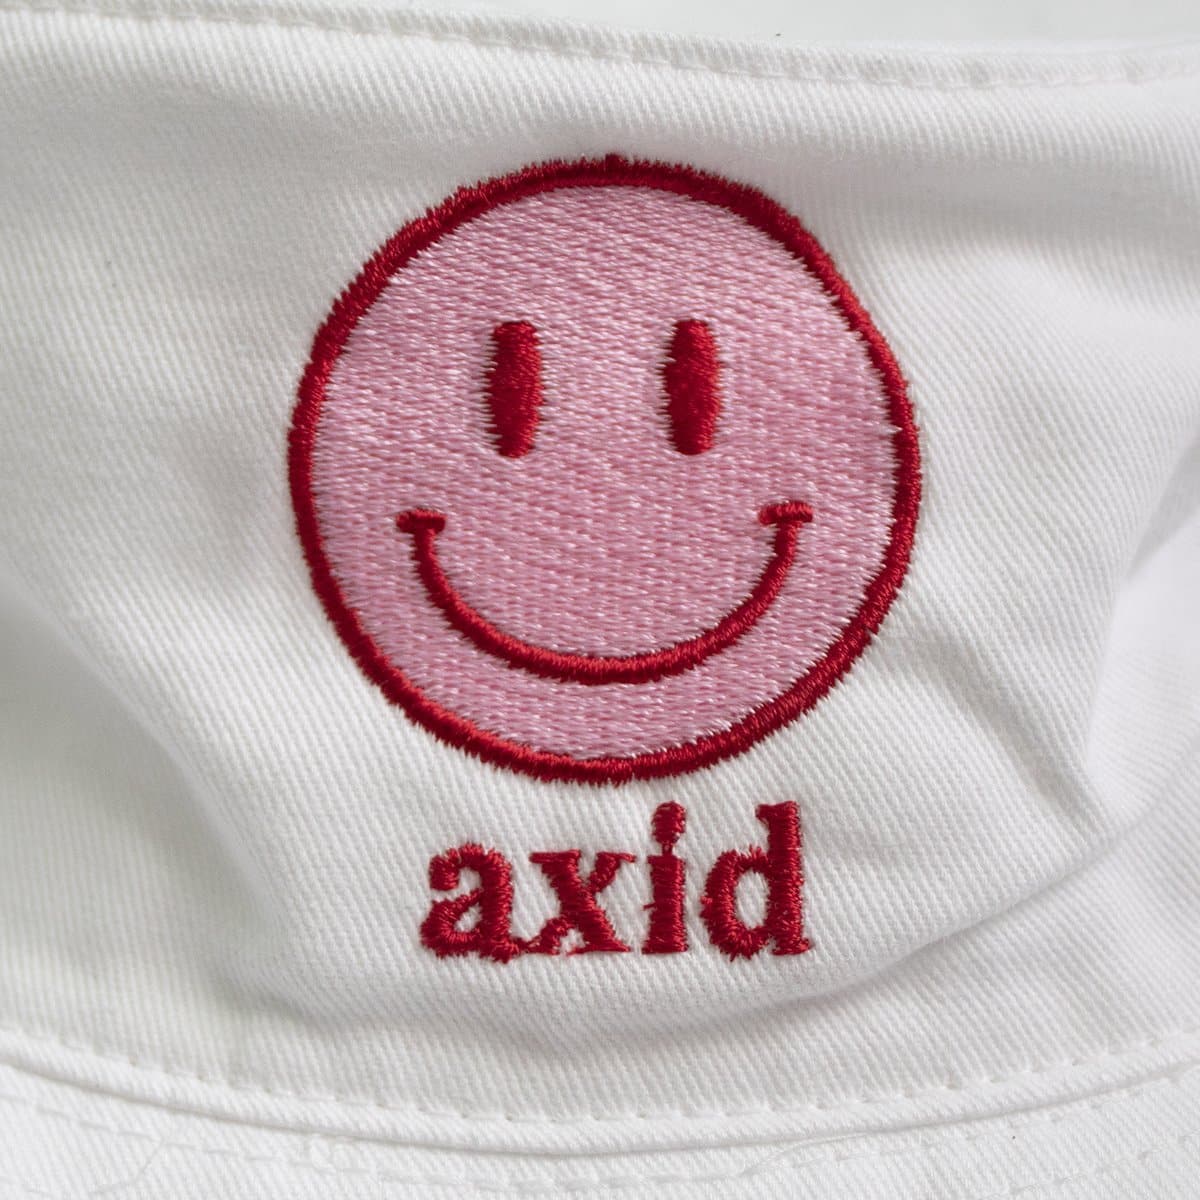 Alpha Phi Smiley Bucket Hat | Alpha Phi | Headwear > Bucket hats